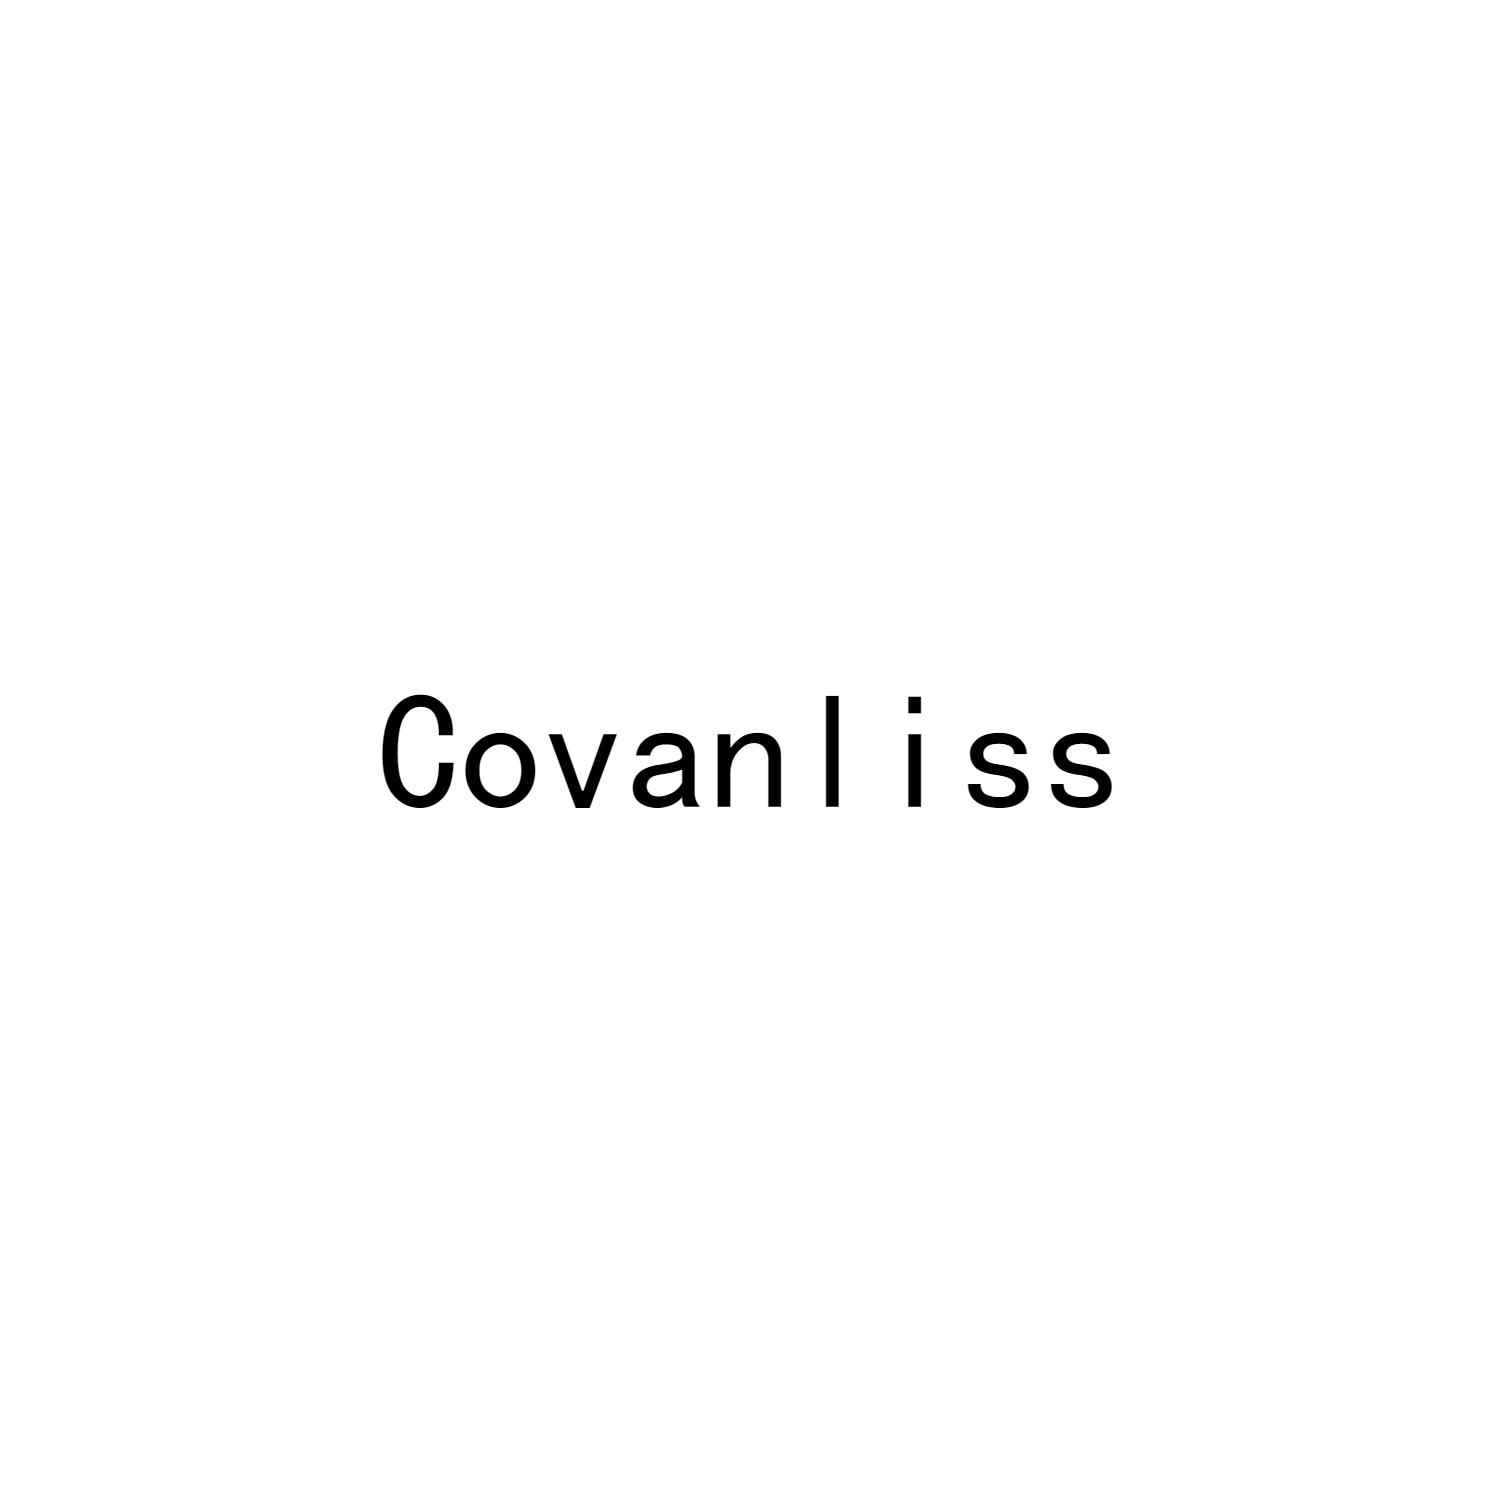 COVANLISS